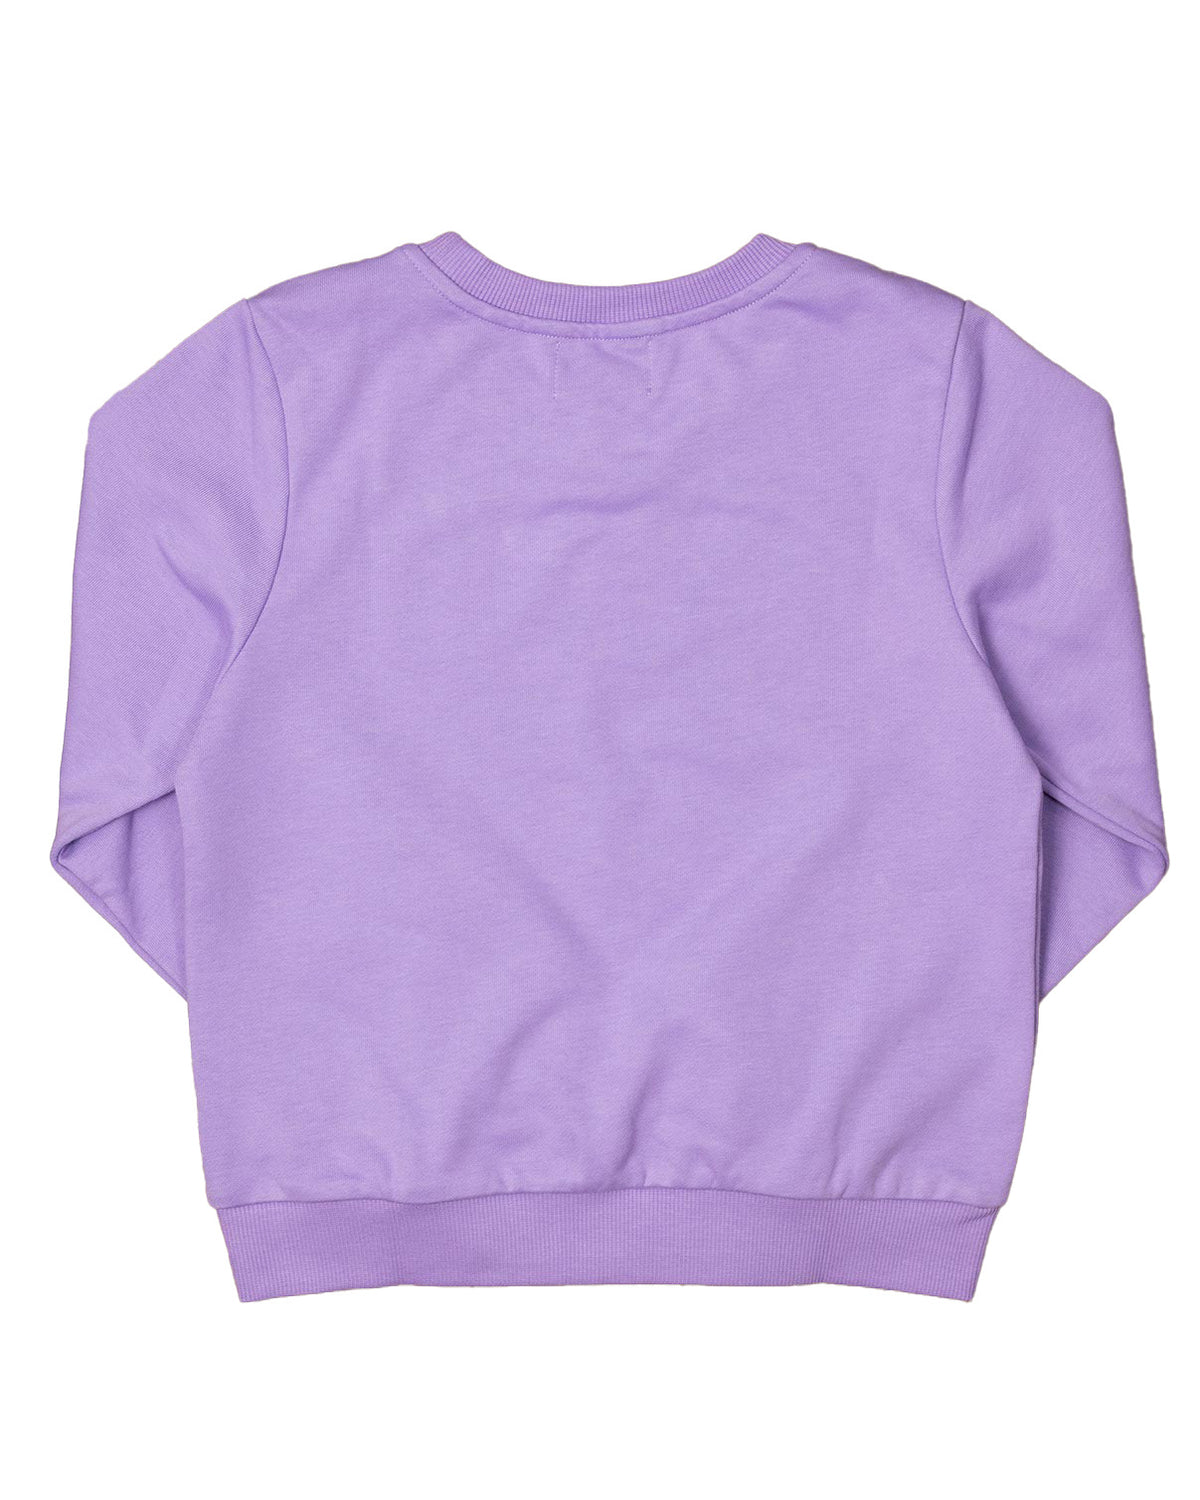 Crewneck Unisex Sweatshirt in Purple- FINAL SALE